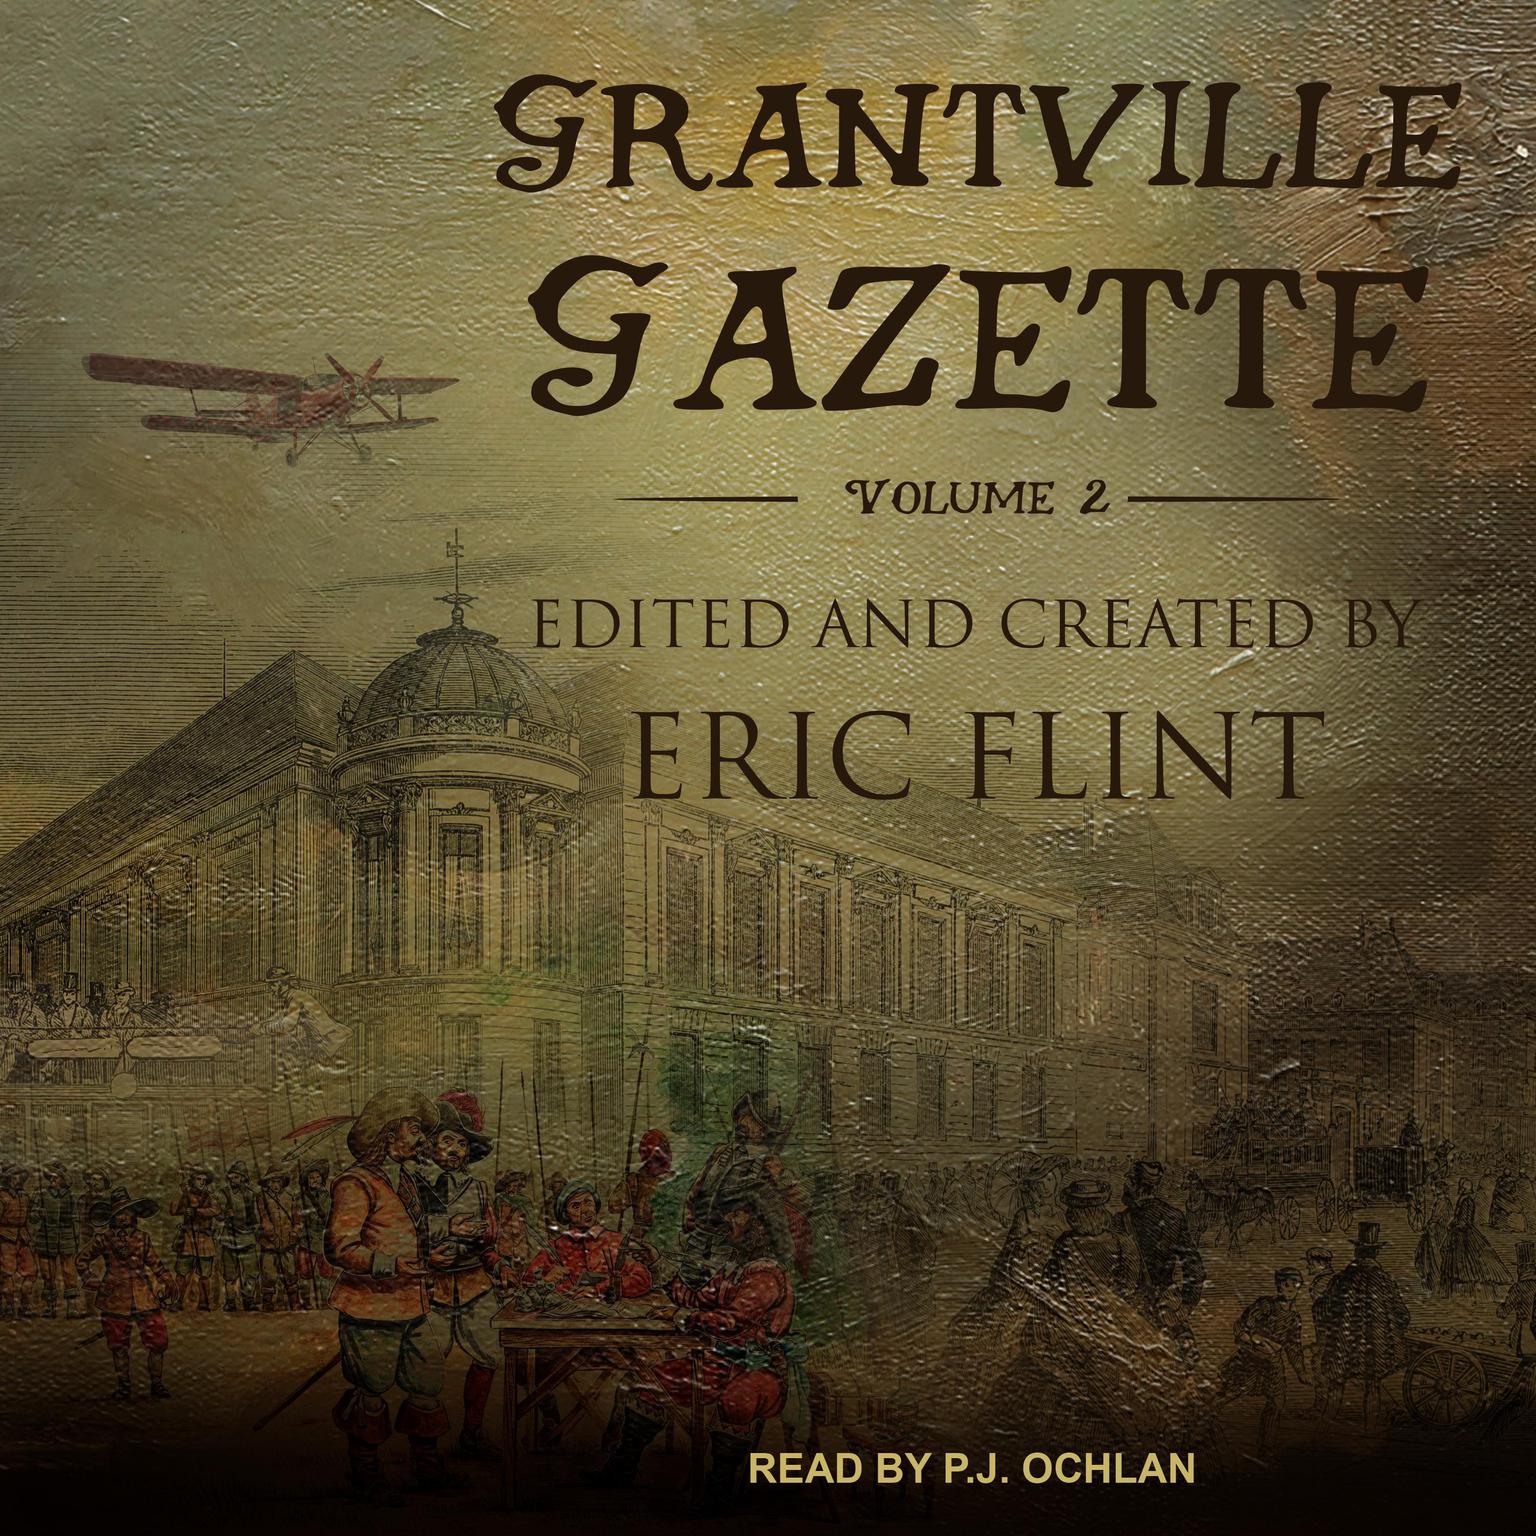 Grantville Gazette, Volume II Audiobook, by Eric Flint